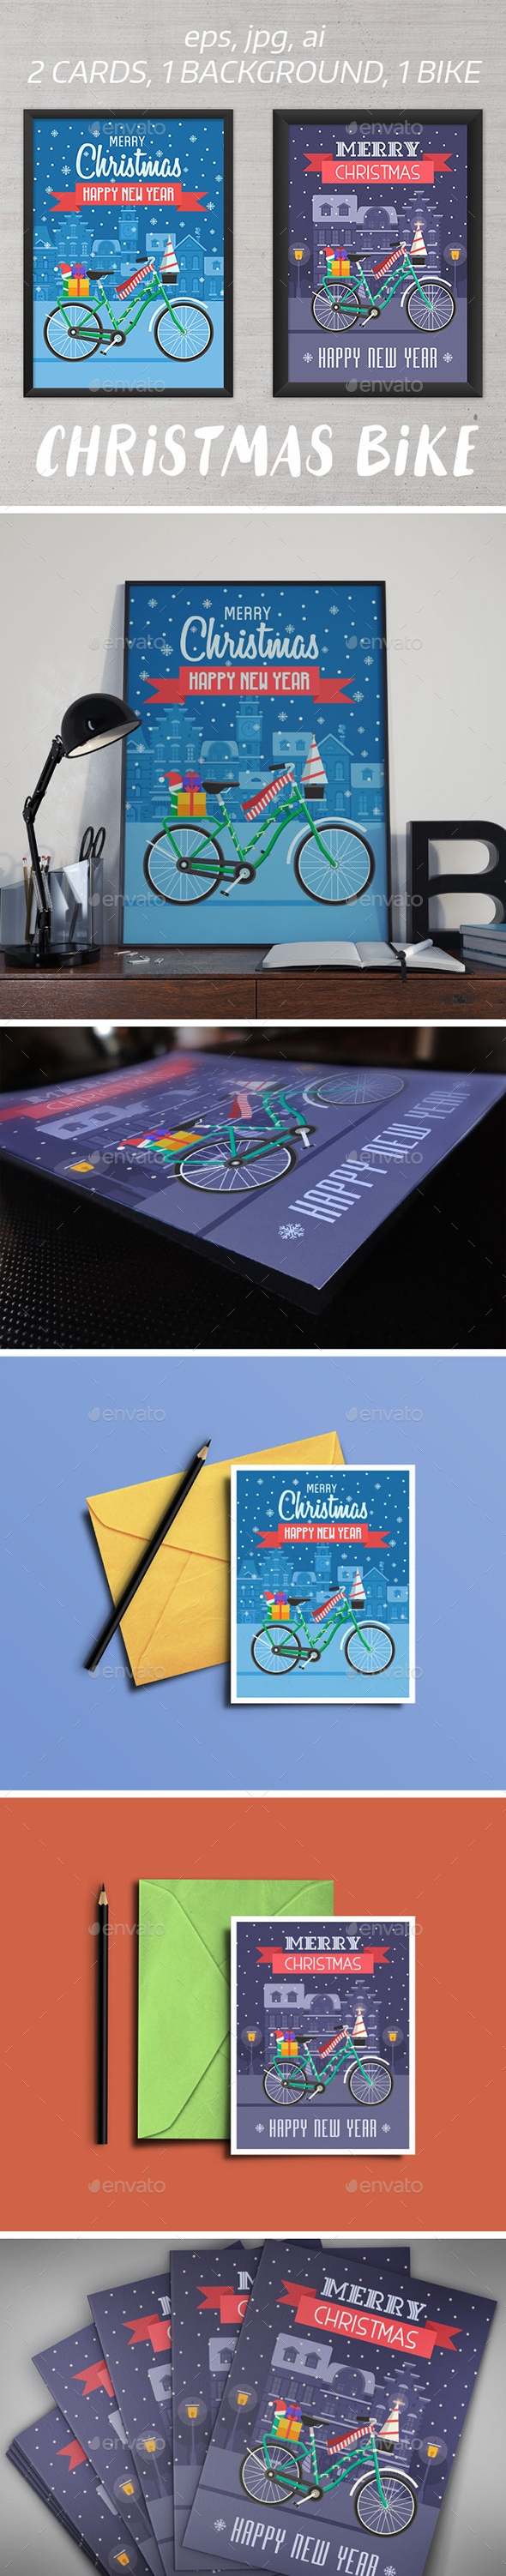 Christmas Bike Greetings Cards